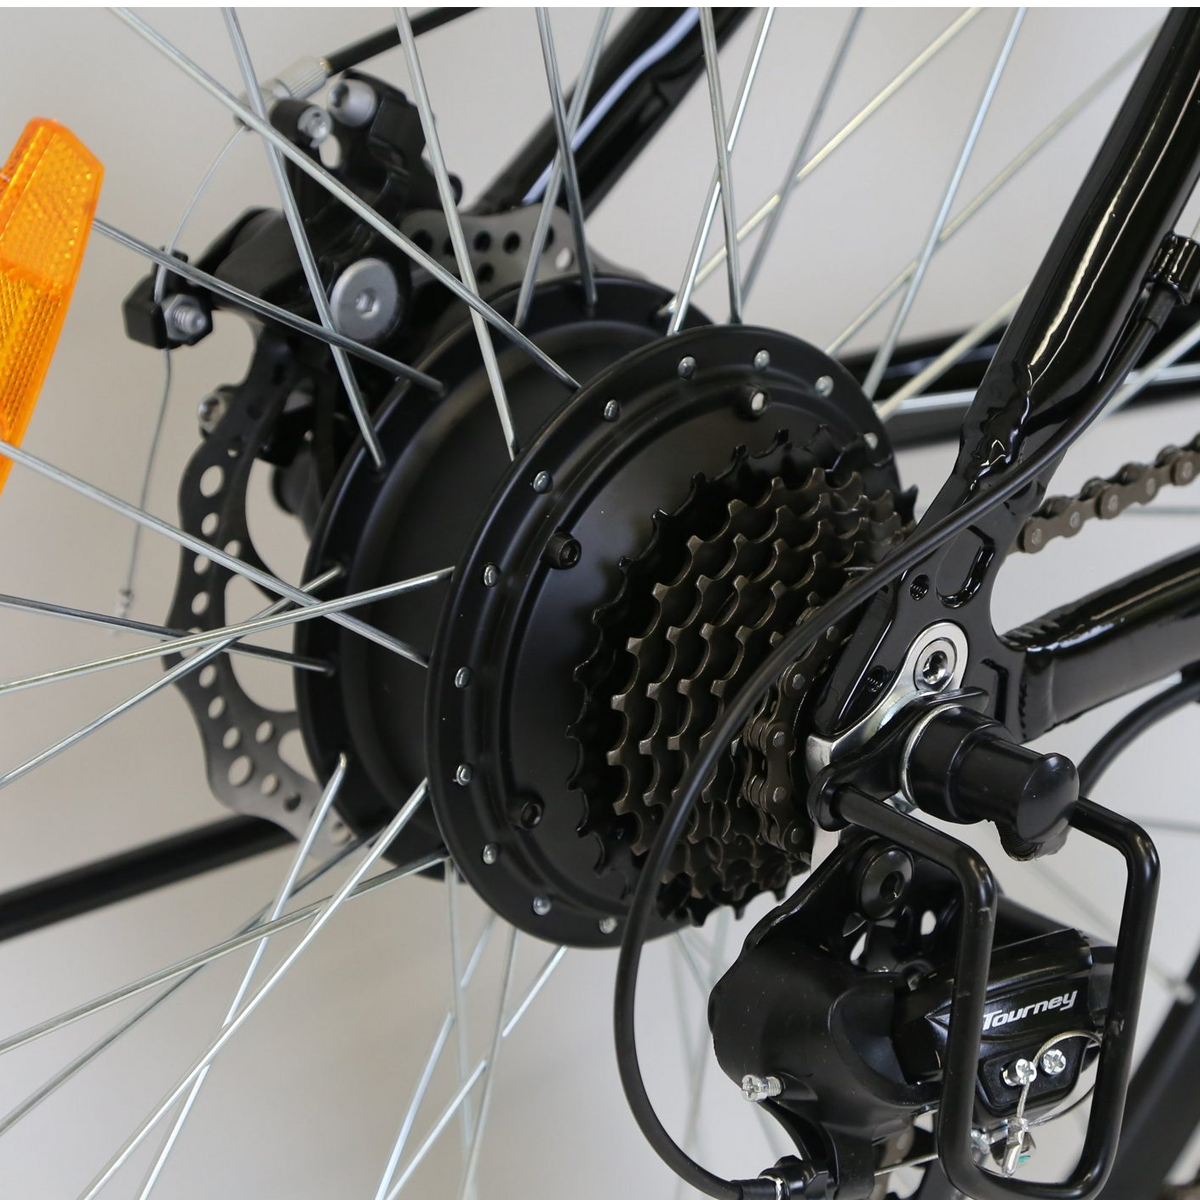 MYATU EB-B All Unisex-Rad, (Laufradgröße: (ATB) 26 Zoll, Schwarz) Bike Terrain